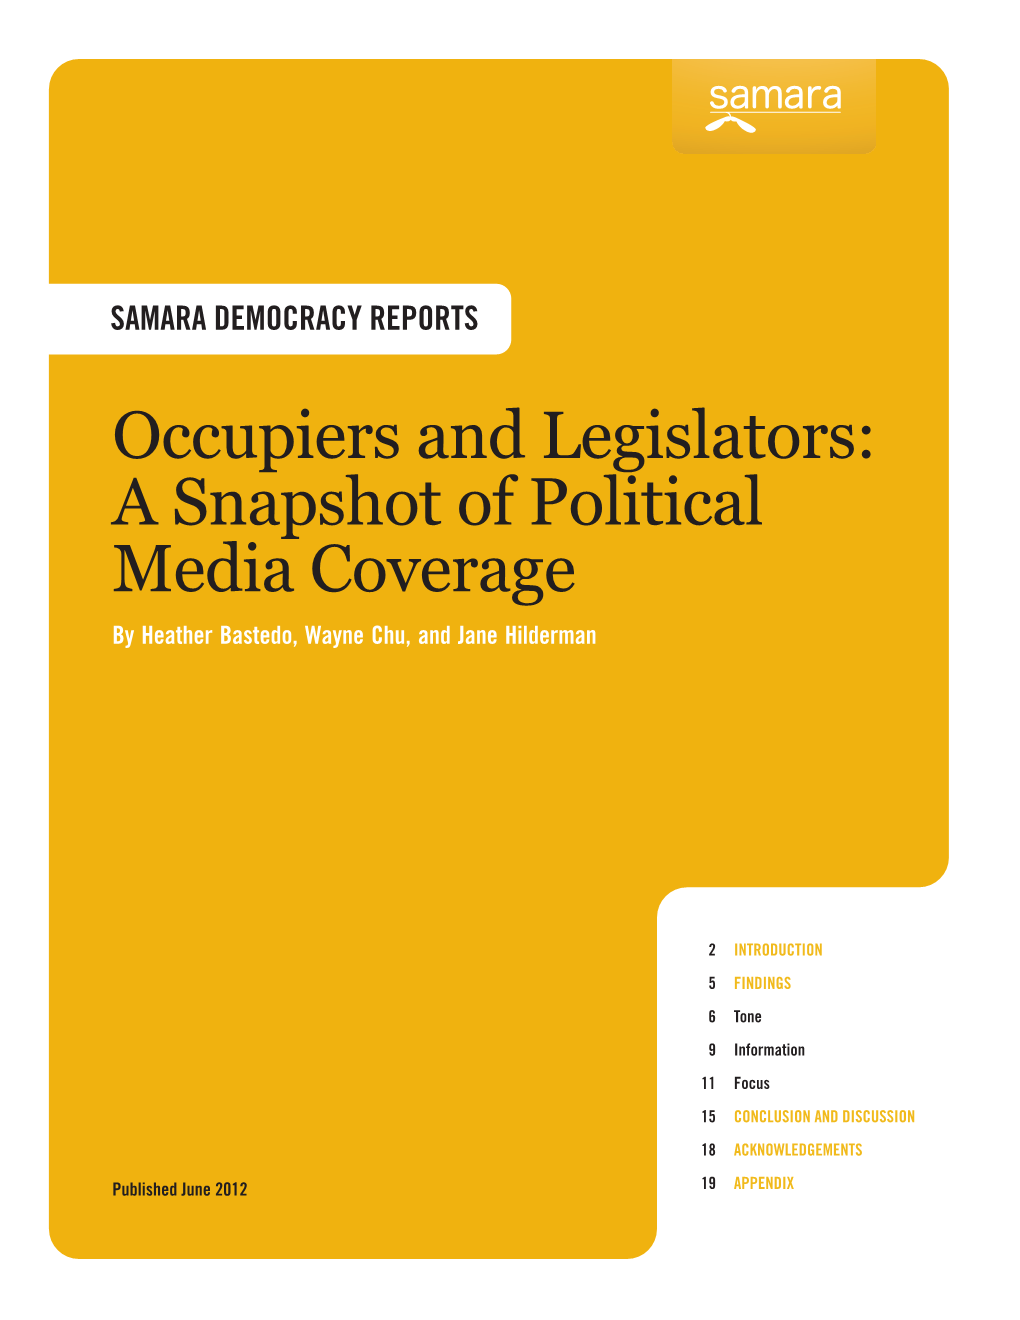 Occupiers and Legislators: a Snapshot of Political Media Coverage by Heather Bastedo, Wayne Chu, and Jane Hilderman